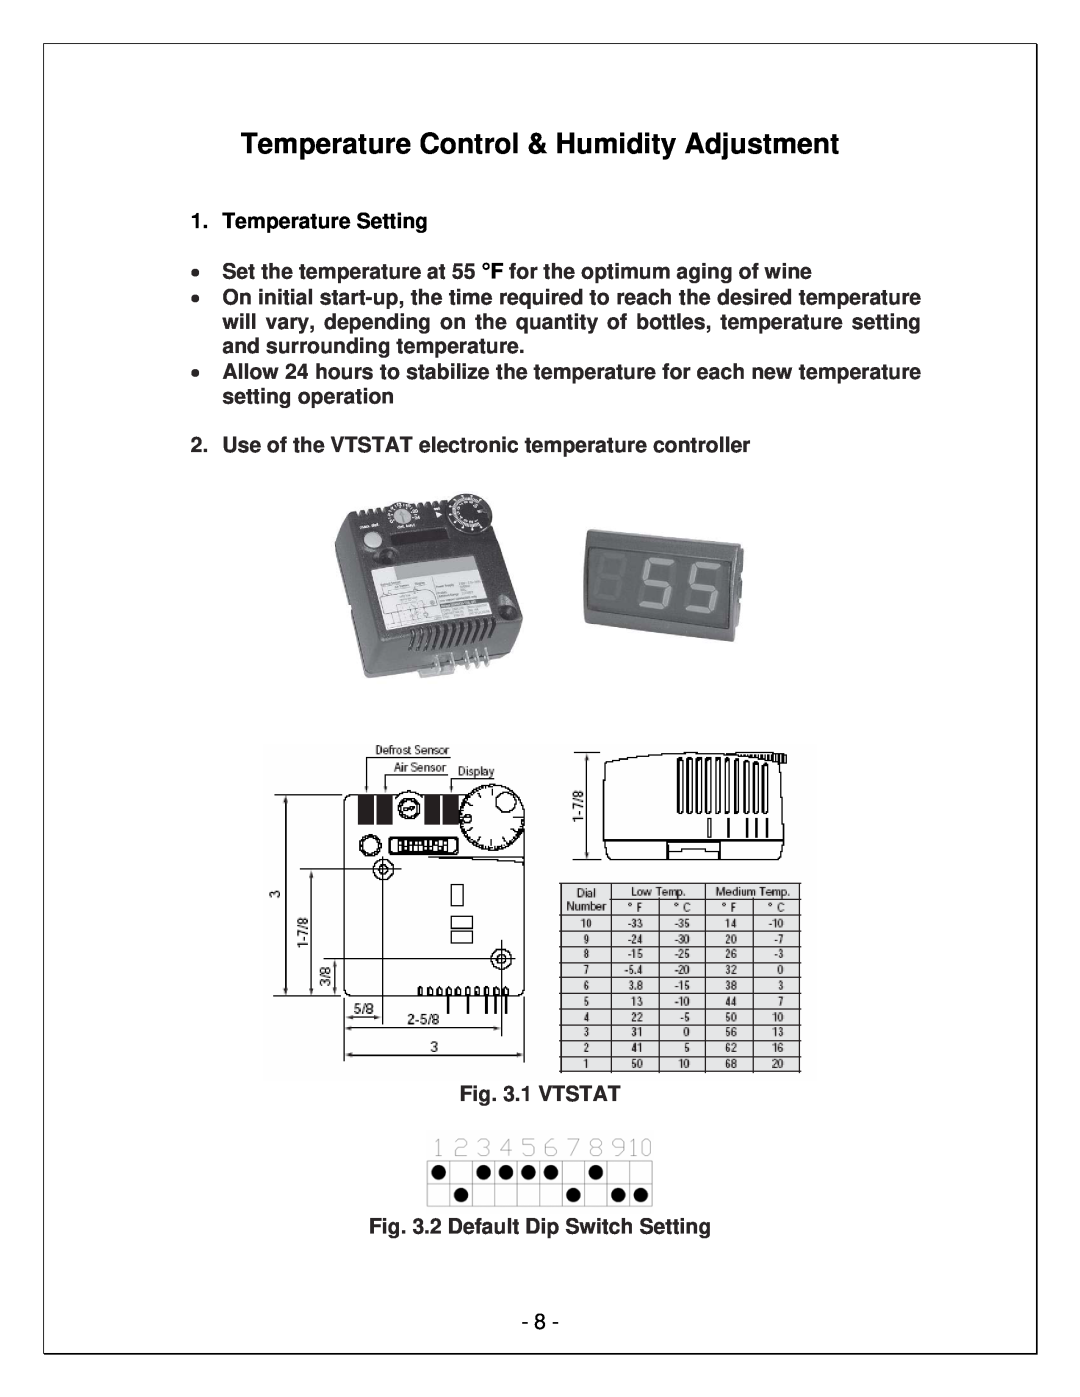 Vinotemp VINO6500DS, VINO8500DS, VINO4500DS manual Temperature Control & Humidity Adjustment, Temperature Setting 